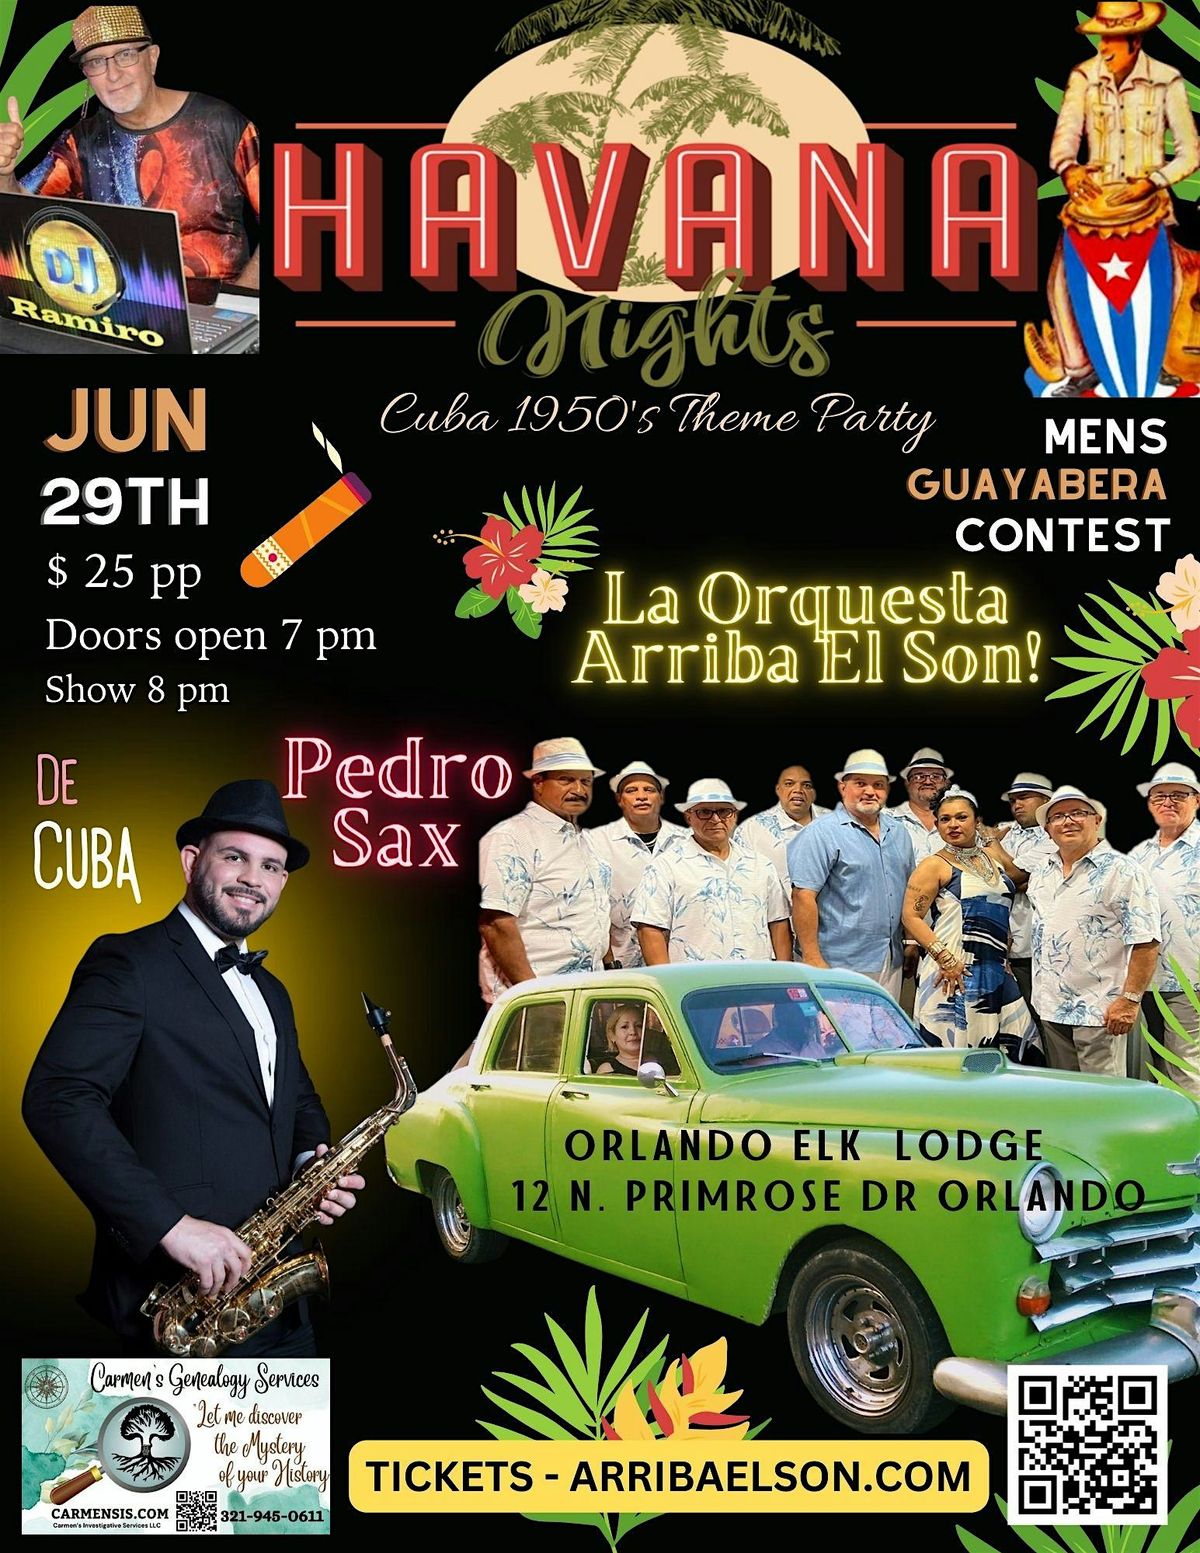 Havana Nights - Cuba Theme Party - Men's Guayabera Contest -SAT Jun 29th